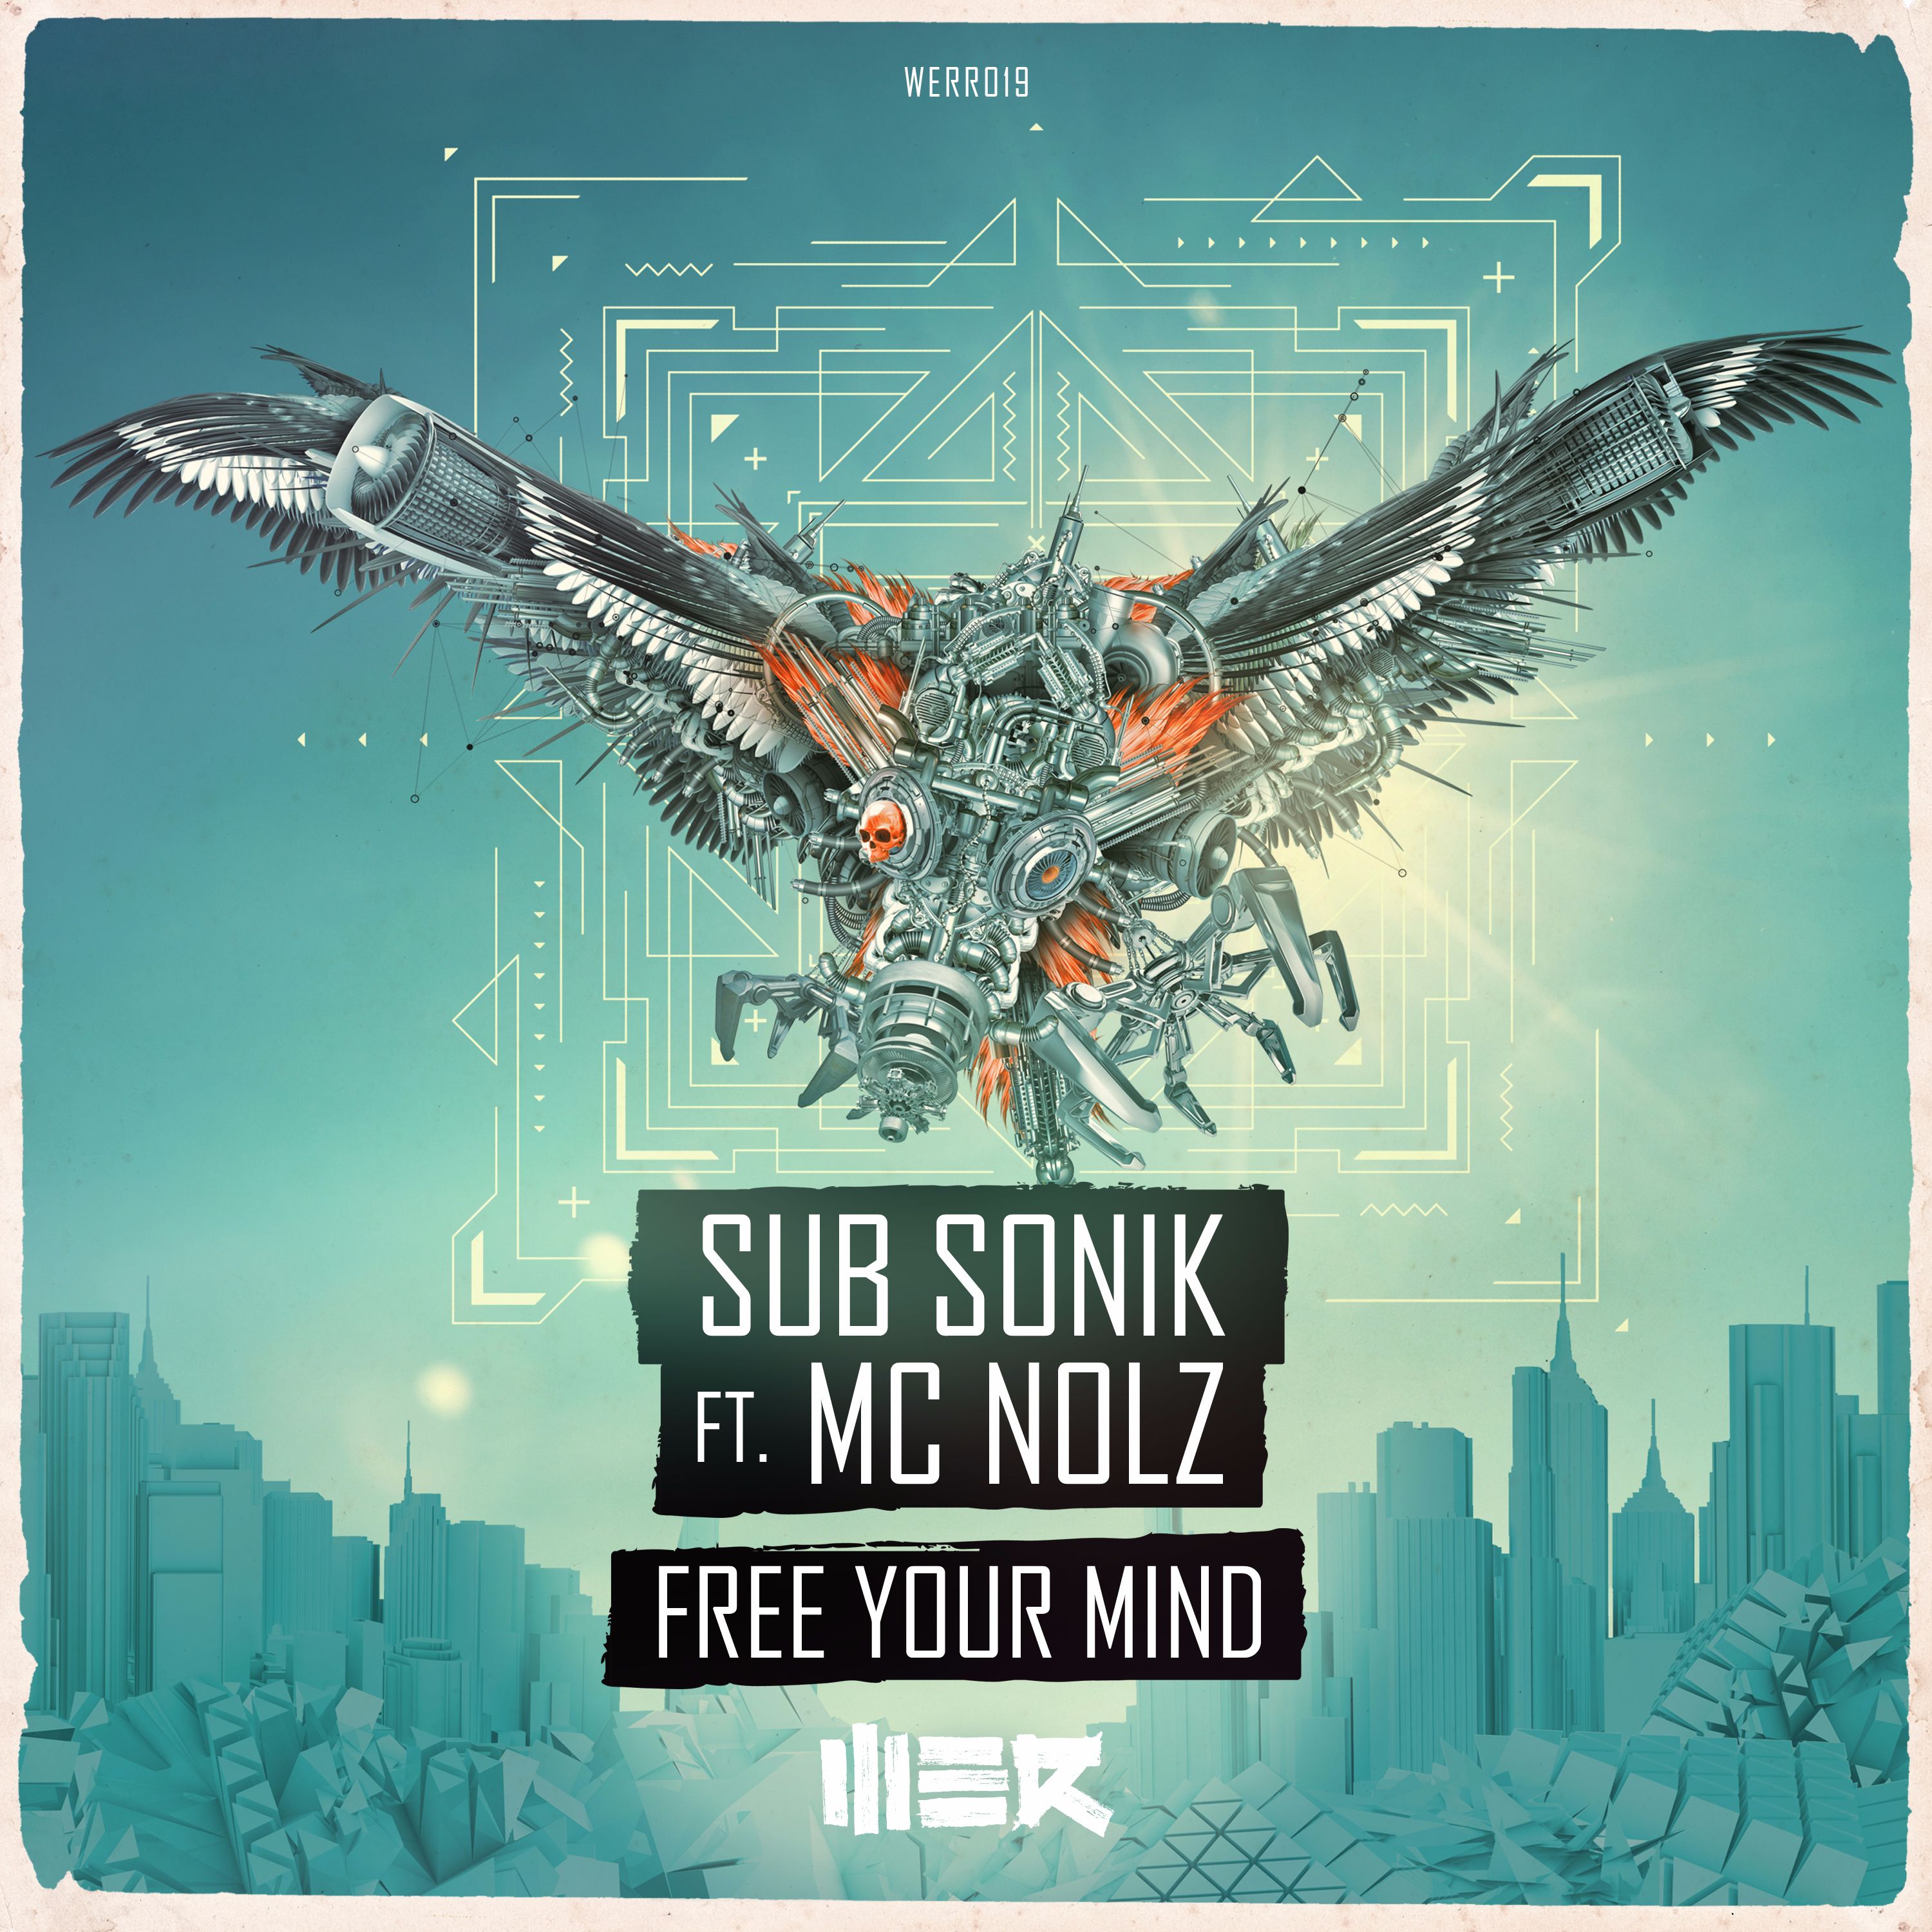 Sub Sonik Ft. MC Nolz - Free Your Mind (Free Festival 2016 Anthem) [WE R RAW] WERR019